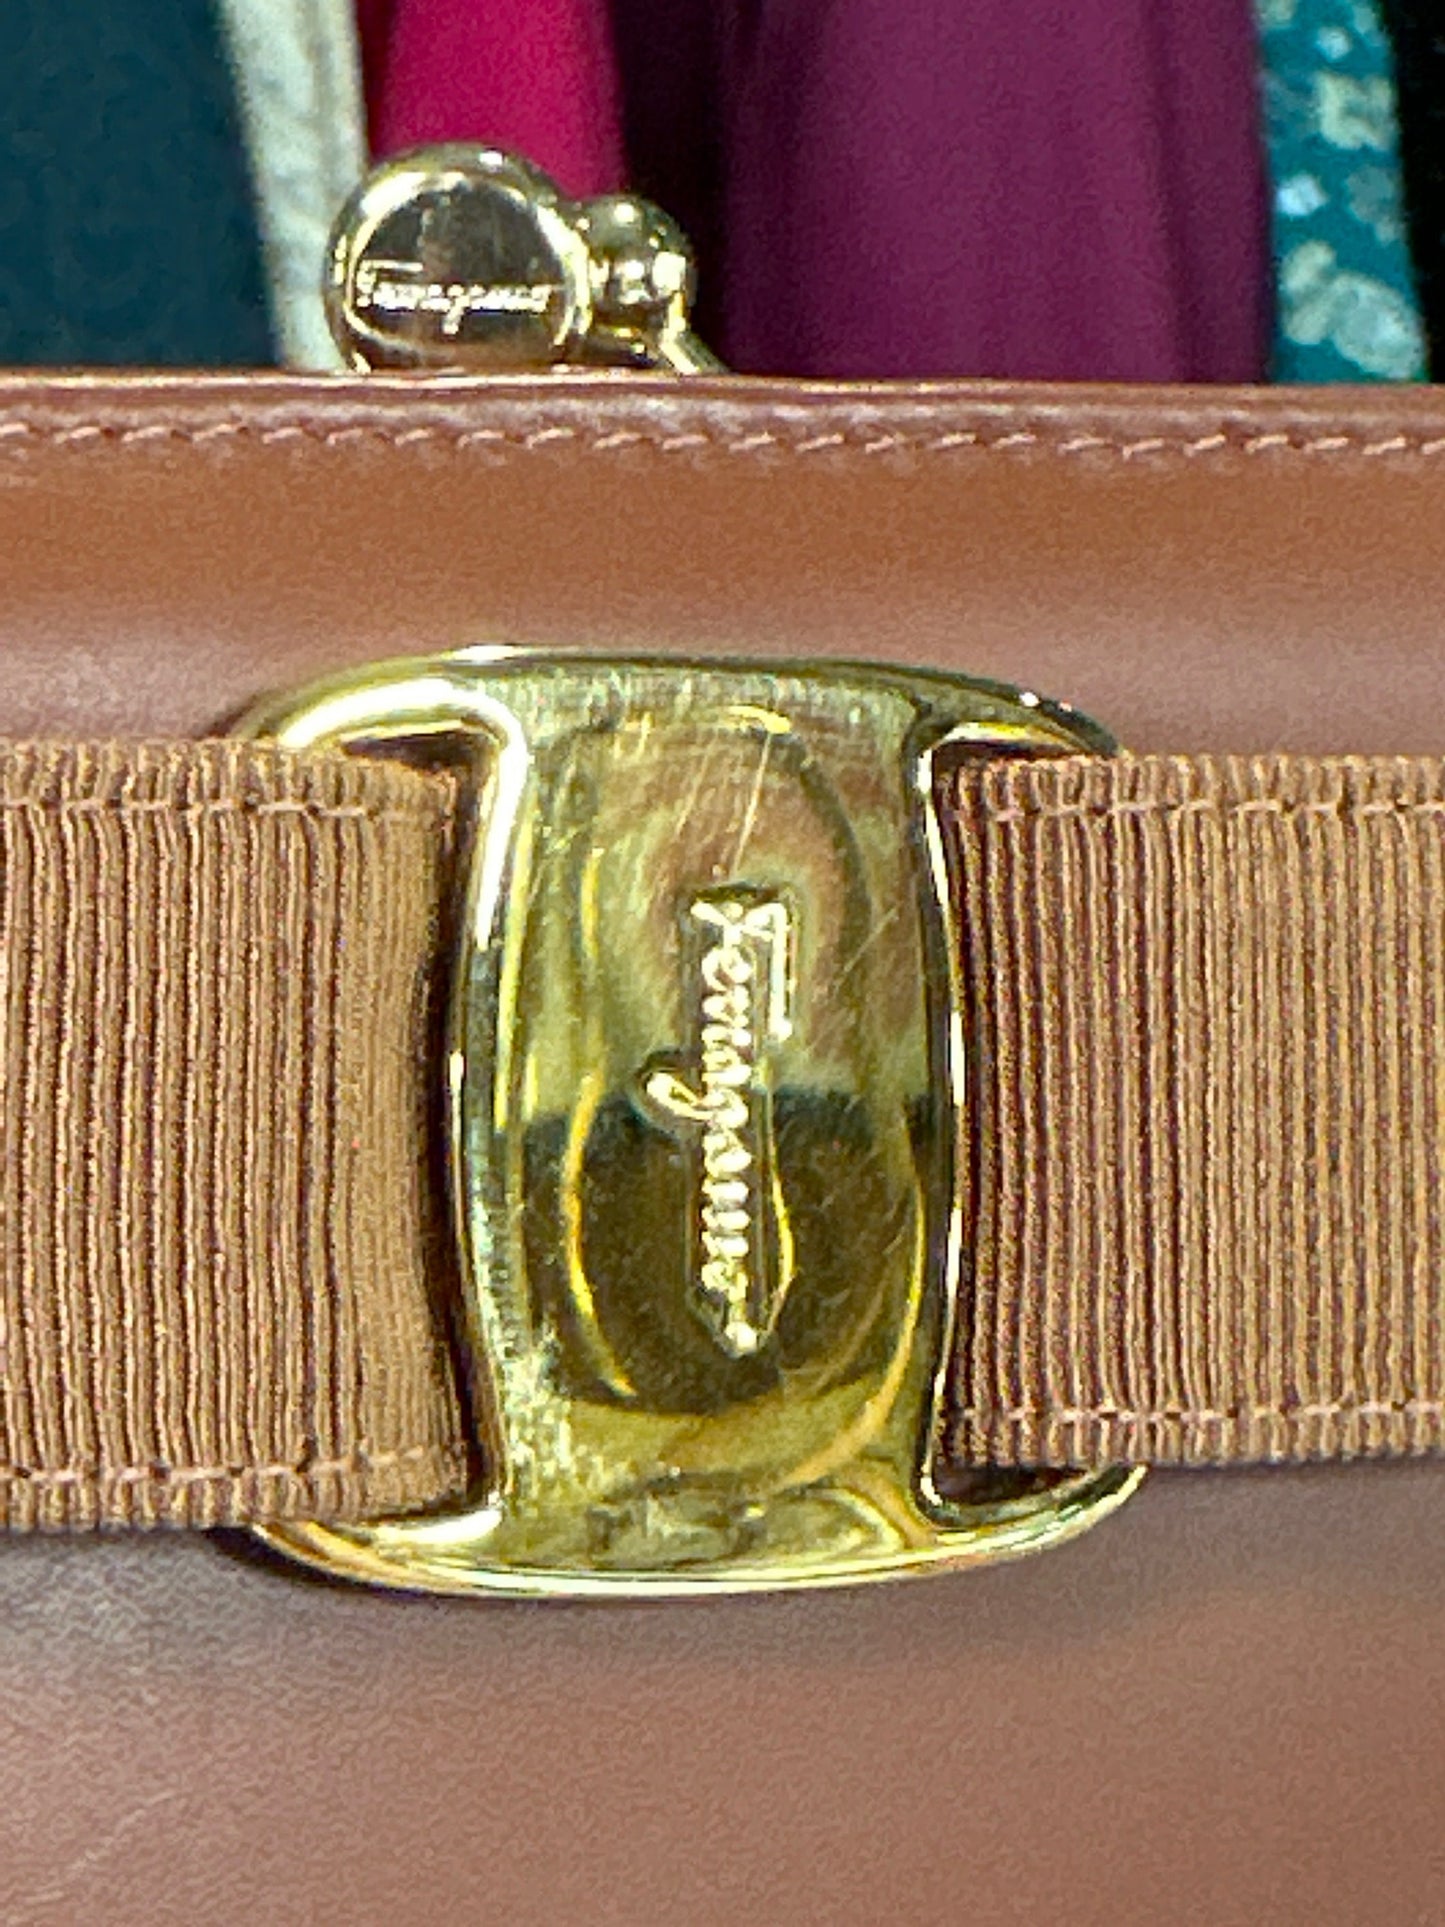 FERRAGAMO VINTAGE 100% Authentic Genuine Vara Bow Chain Shoulder Bag, Caramel Brown, 1990's, Great Condition, Grade AB